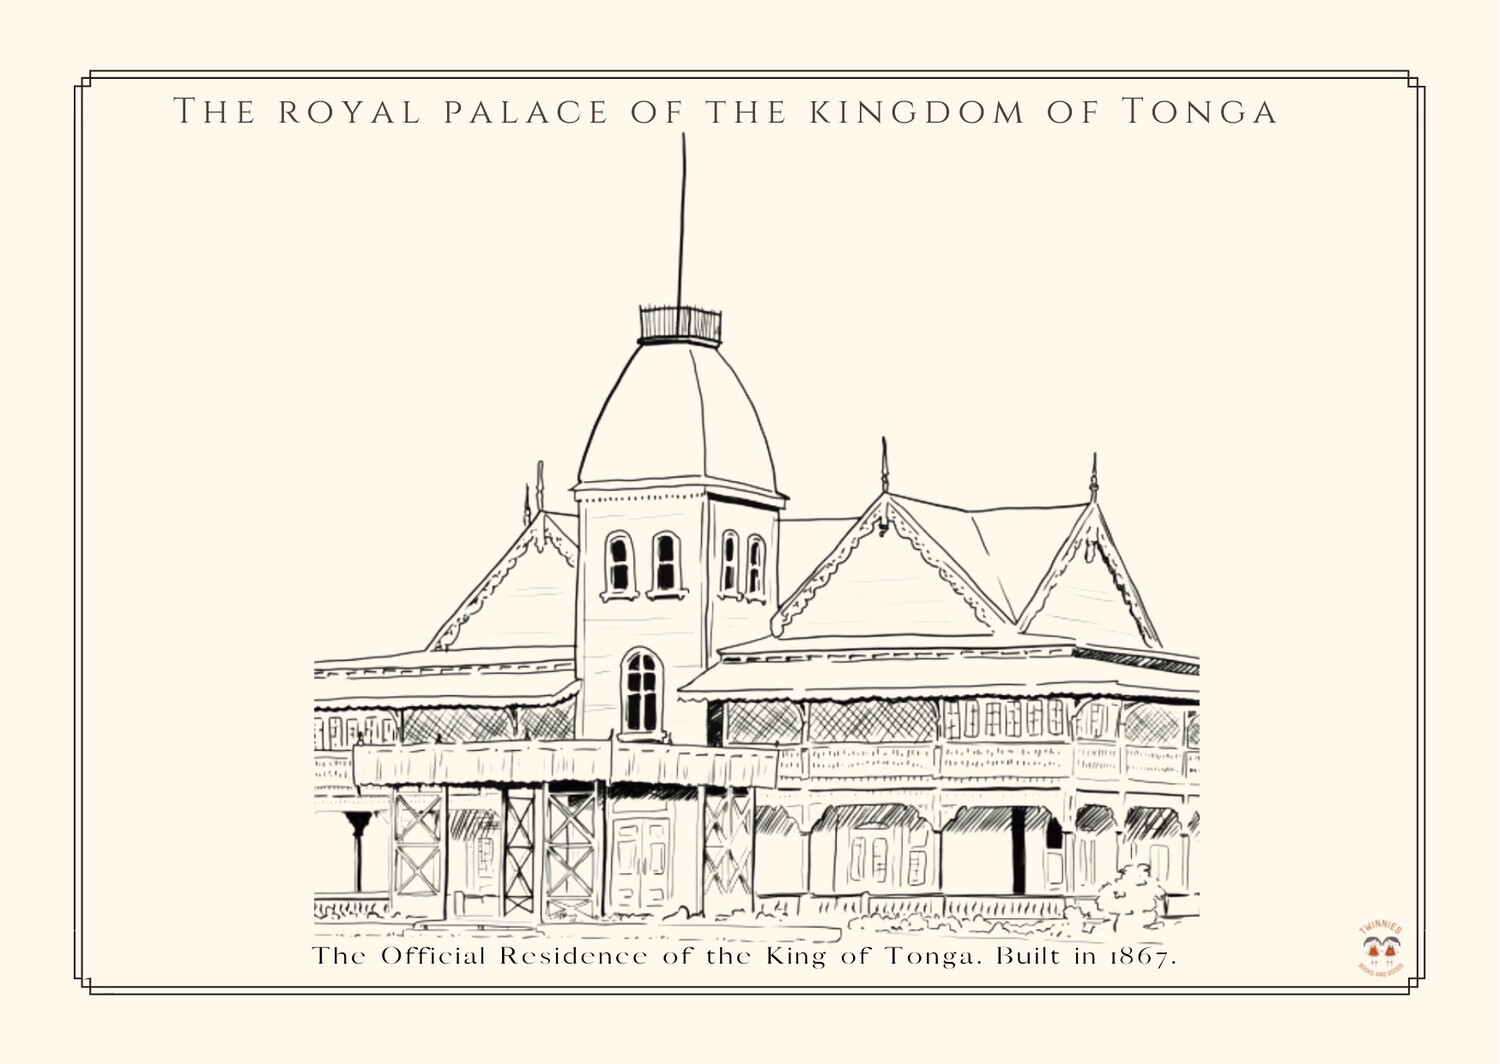 THE SIOFIA POSTCARDS :
THE ROYAL PALACE OF THE KINGDOM OF TONGA.